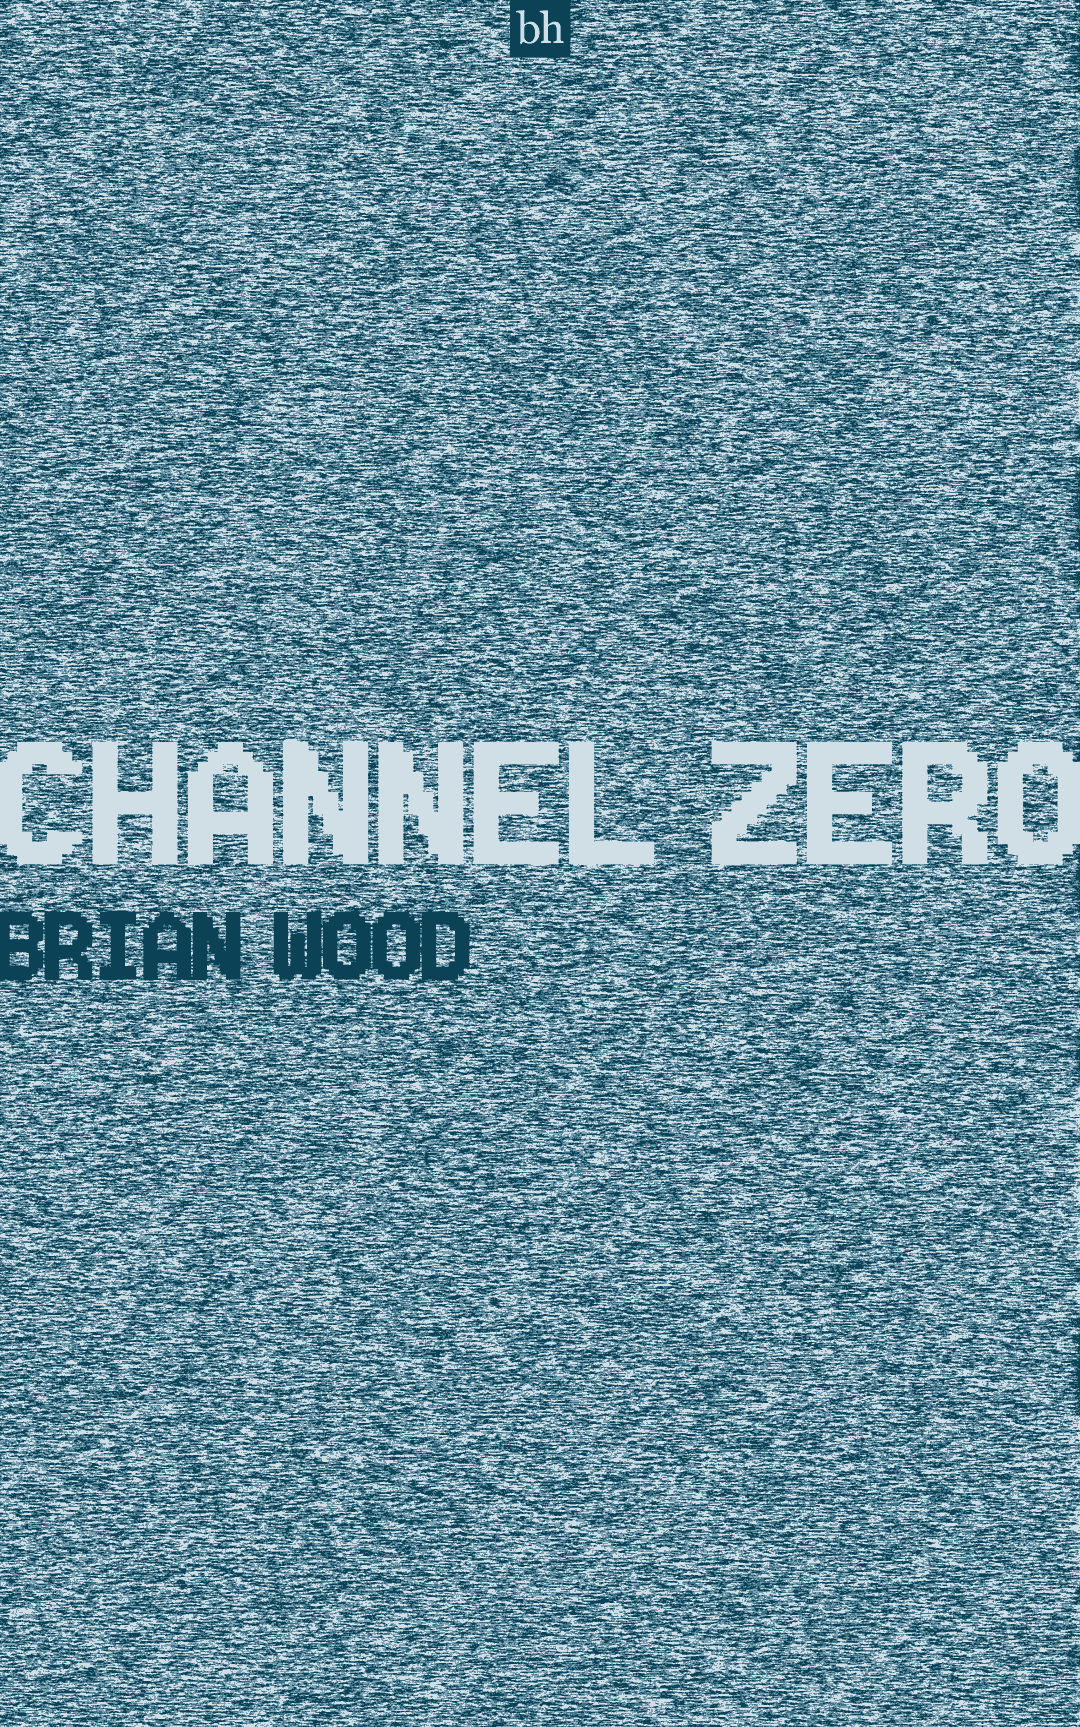 Channel Zero by Brian Wood